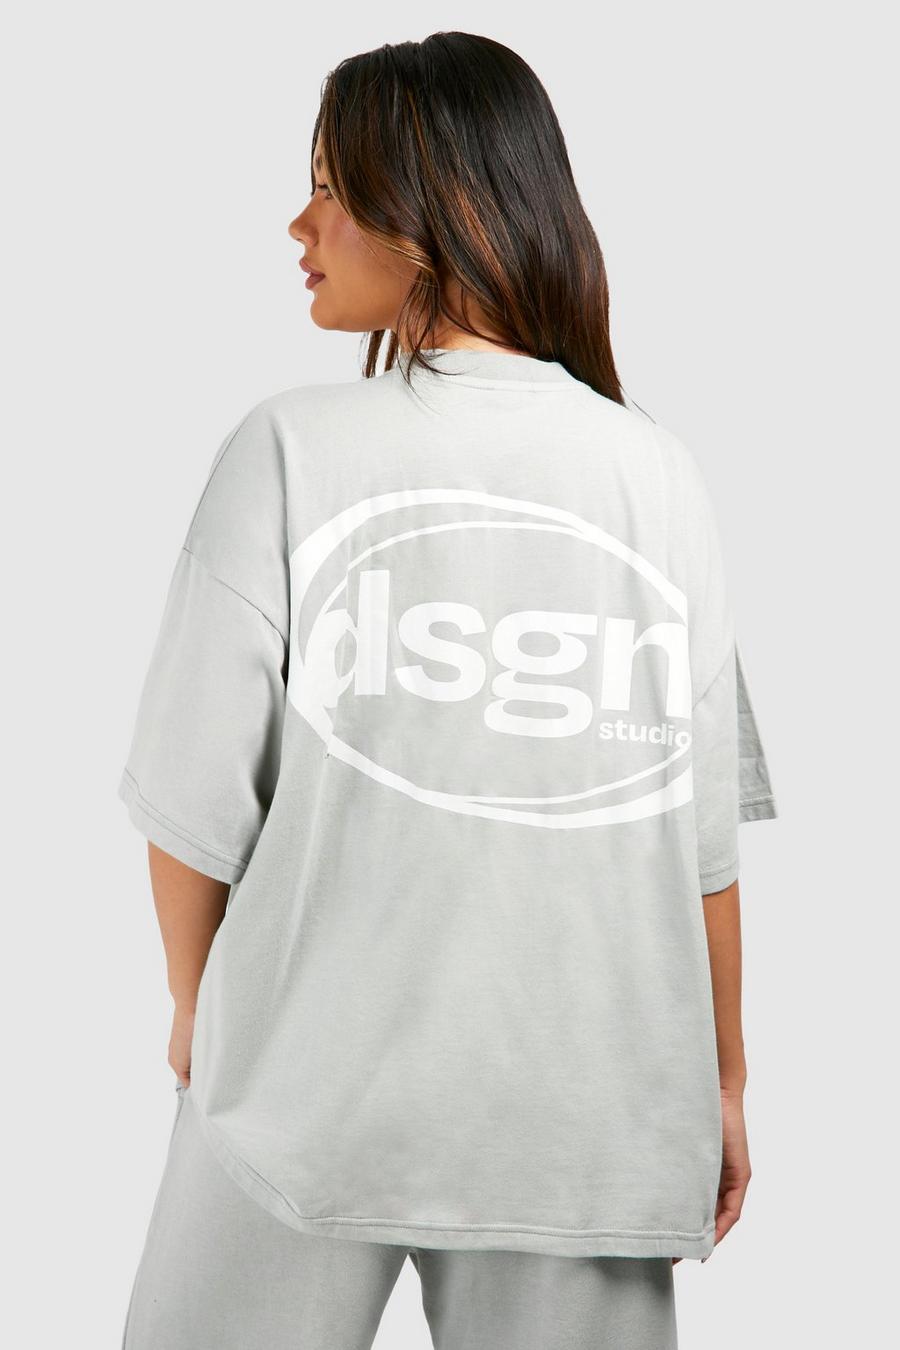 T-shirt oversize con stampa Dsgn Studio, Ice grey